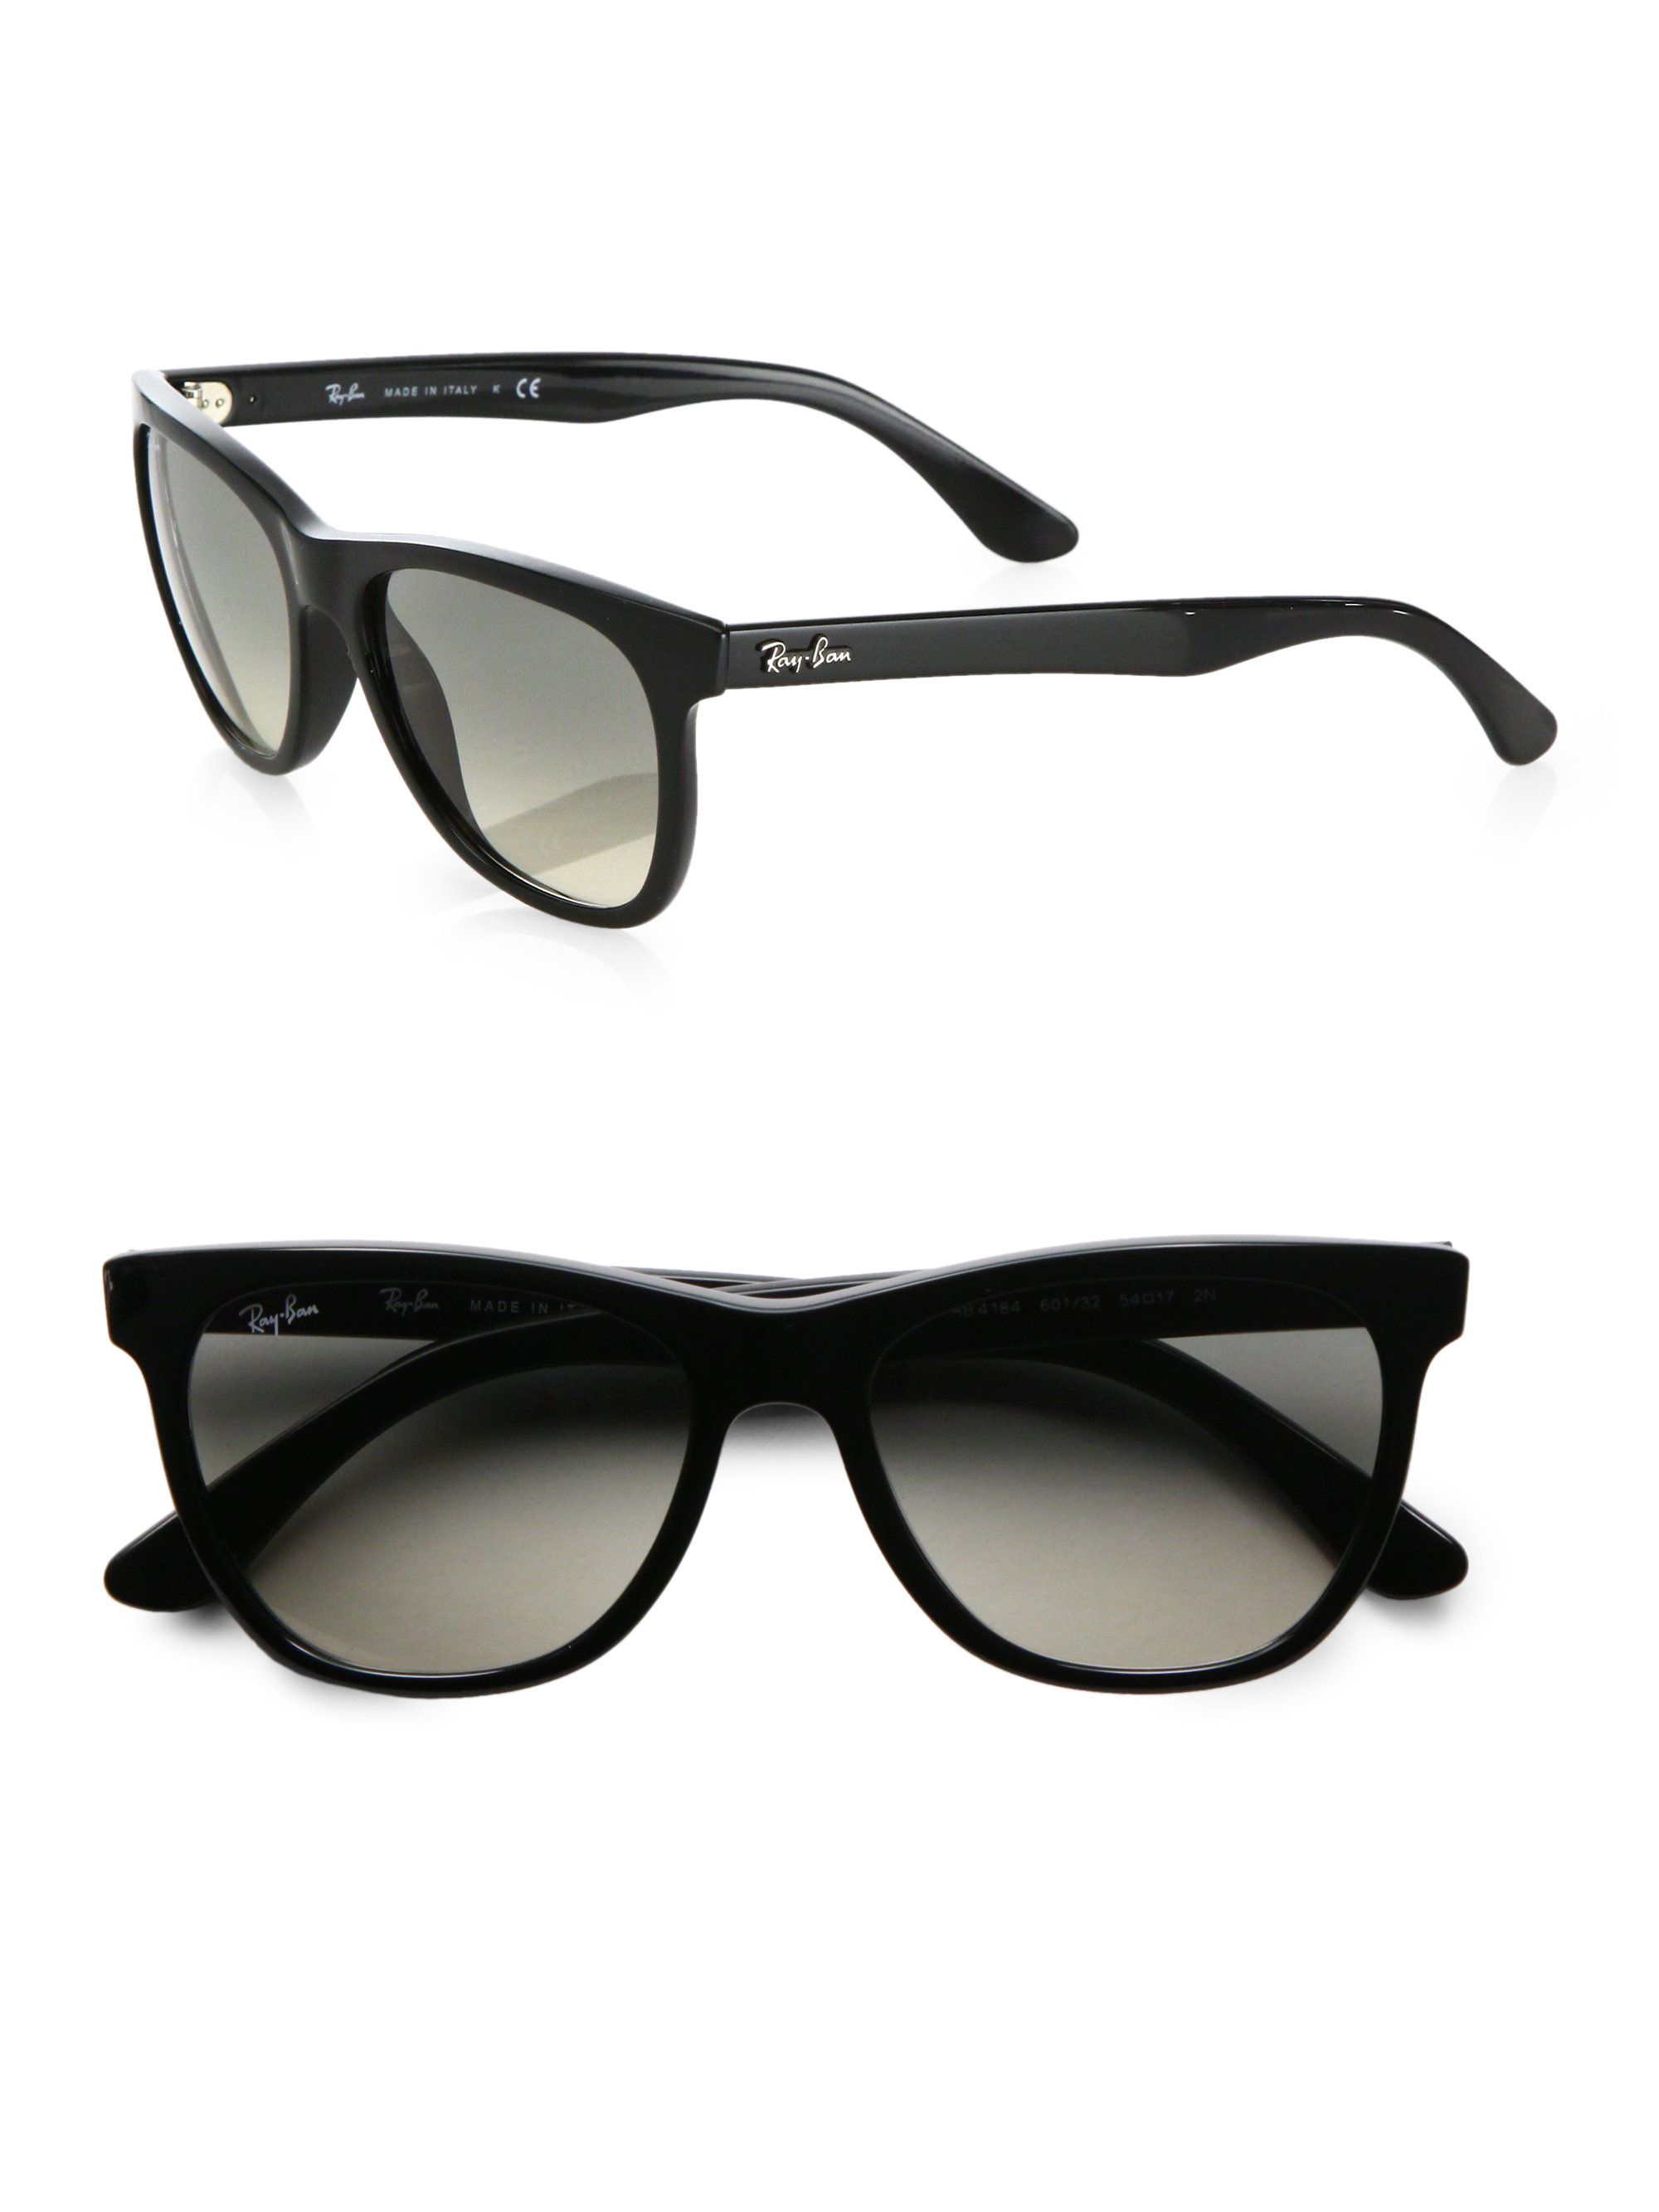 wayfarer sunglasses with thin sides